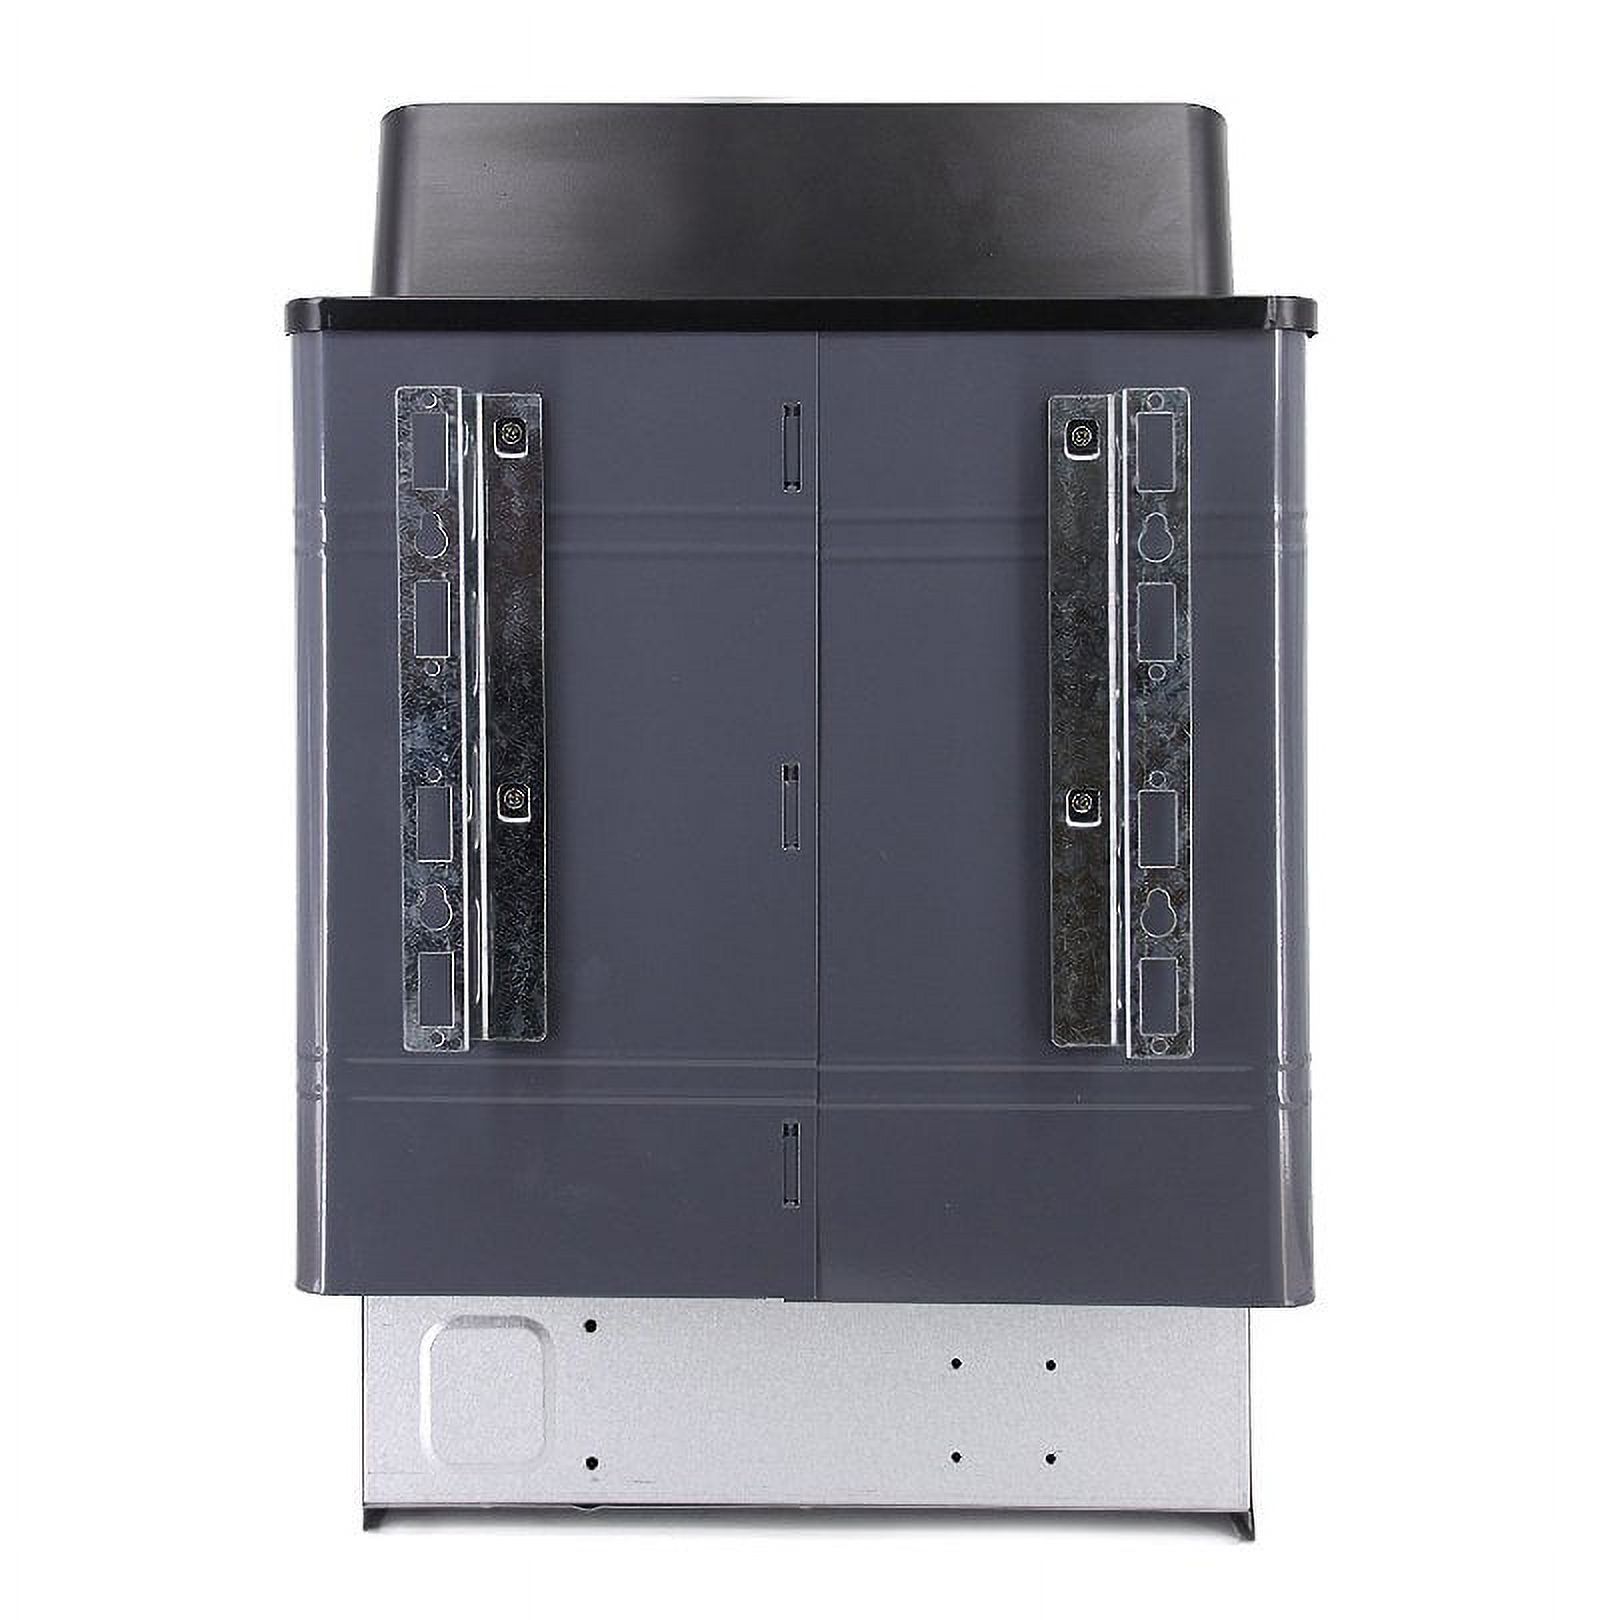 COASTS AM30MI Sauna Heater 3KW 240V Inner Controller for Spa Sauna Room - image 2 of 7